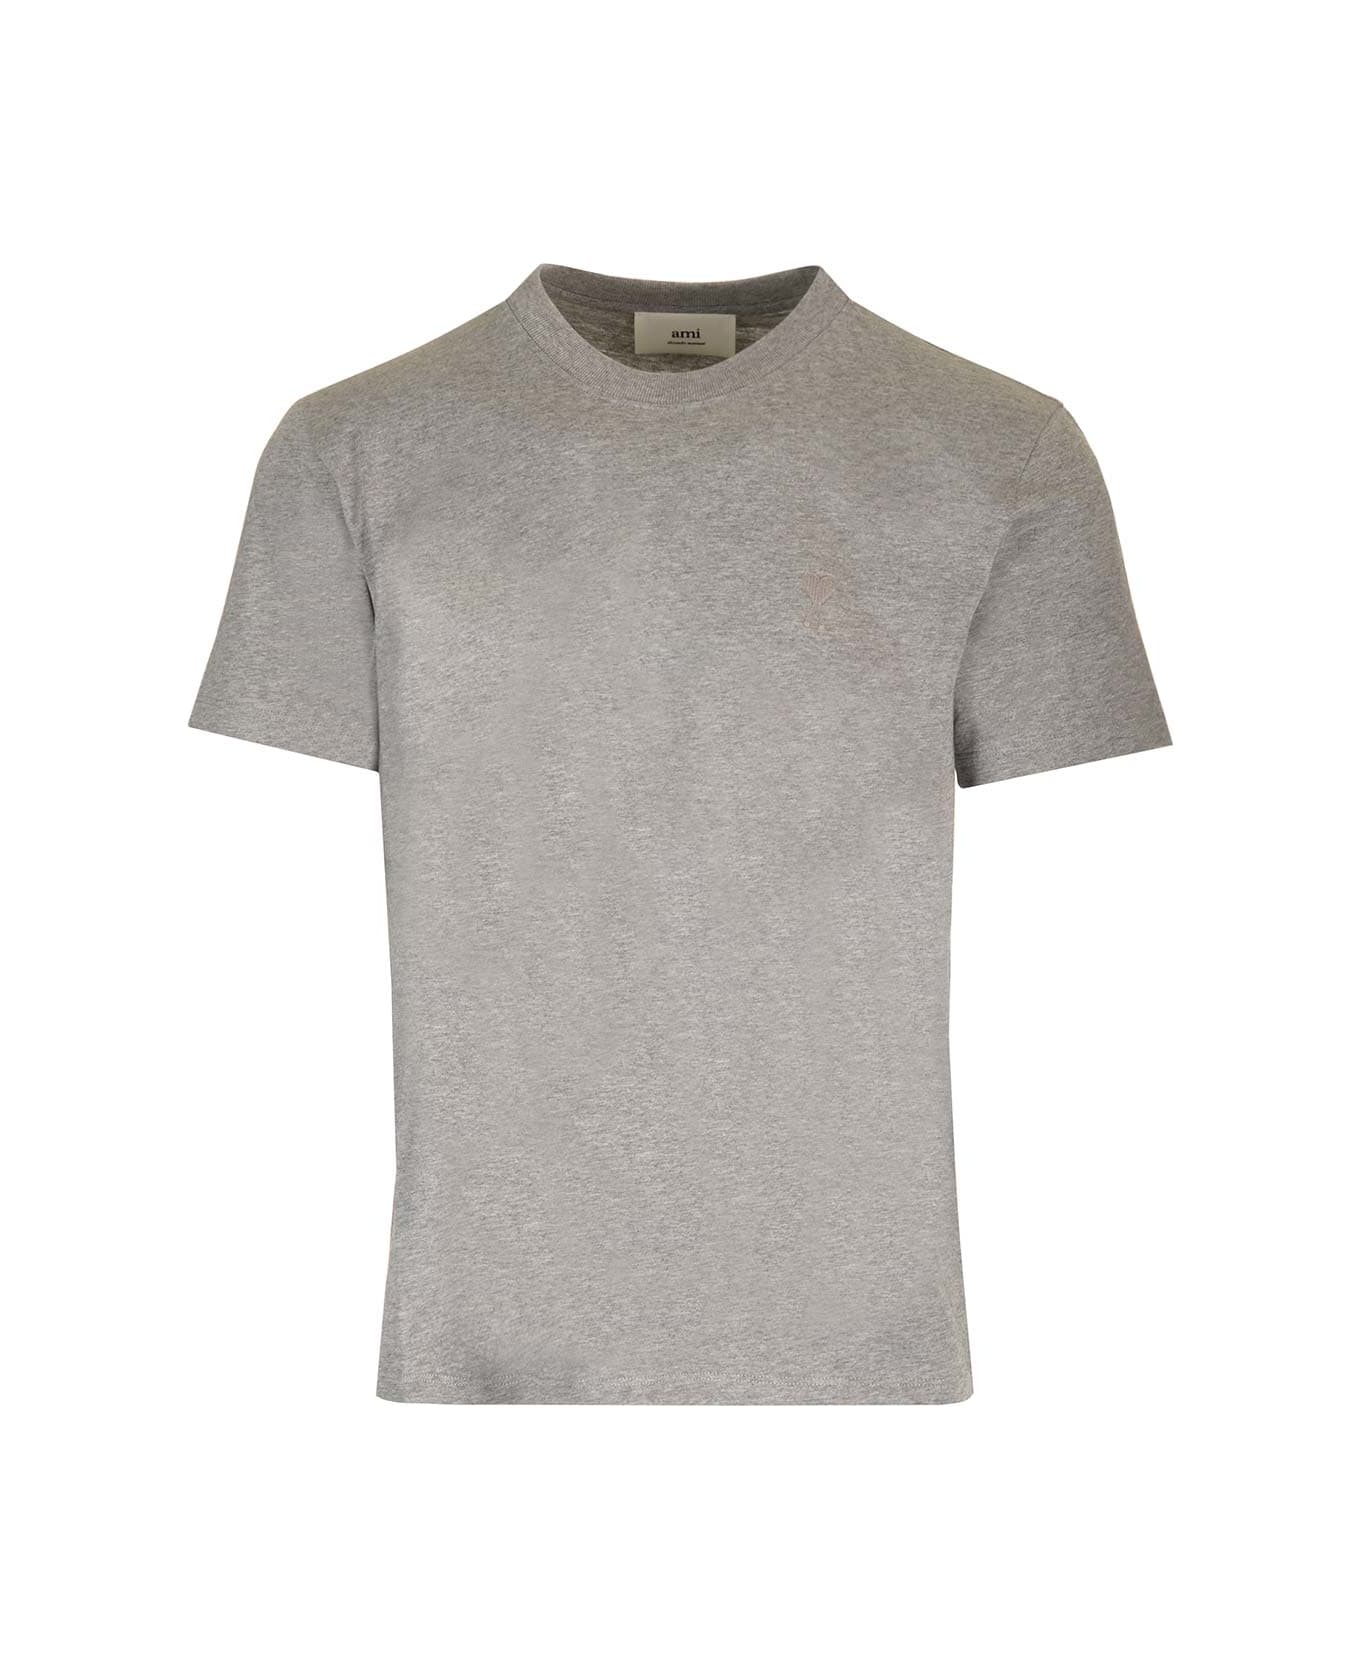 Ami Alexandre Mattiussi Grey T-shirt With Mini Logo - Heather Grey